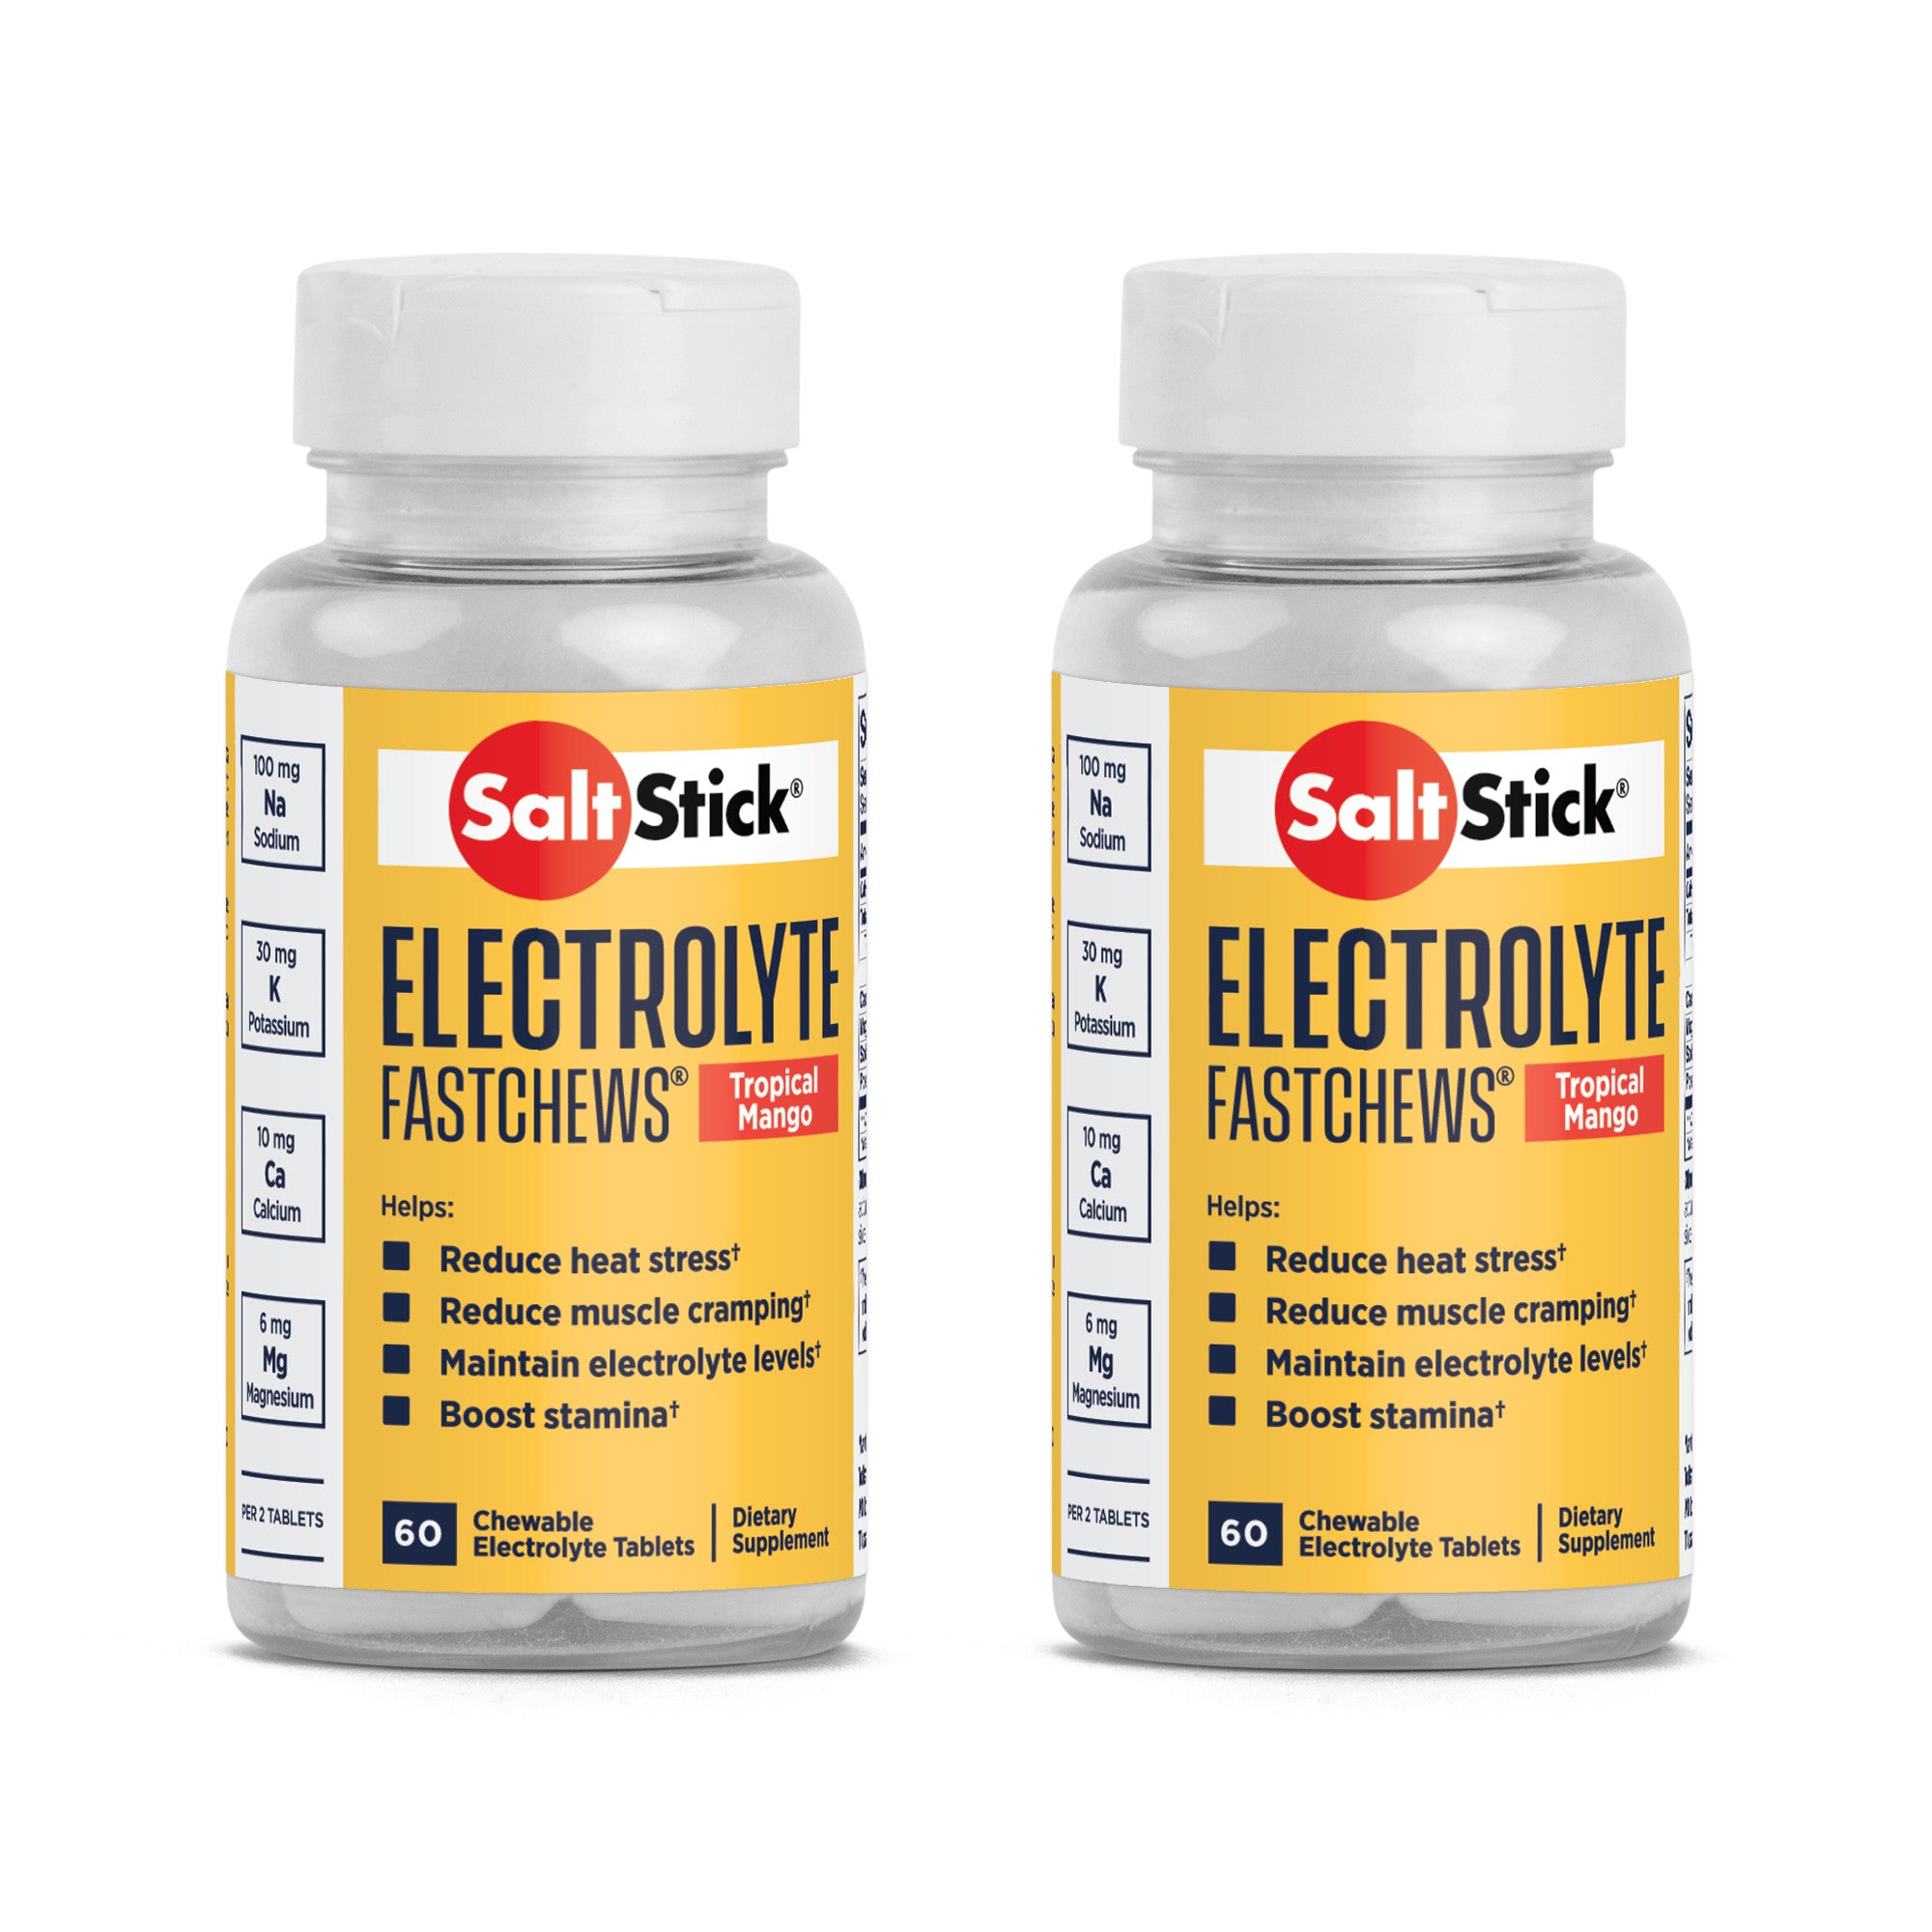 SaltStick Electrolyte FastChews 60 tablets Bottles